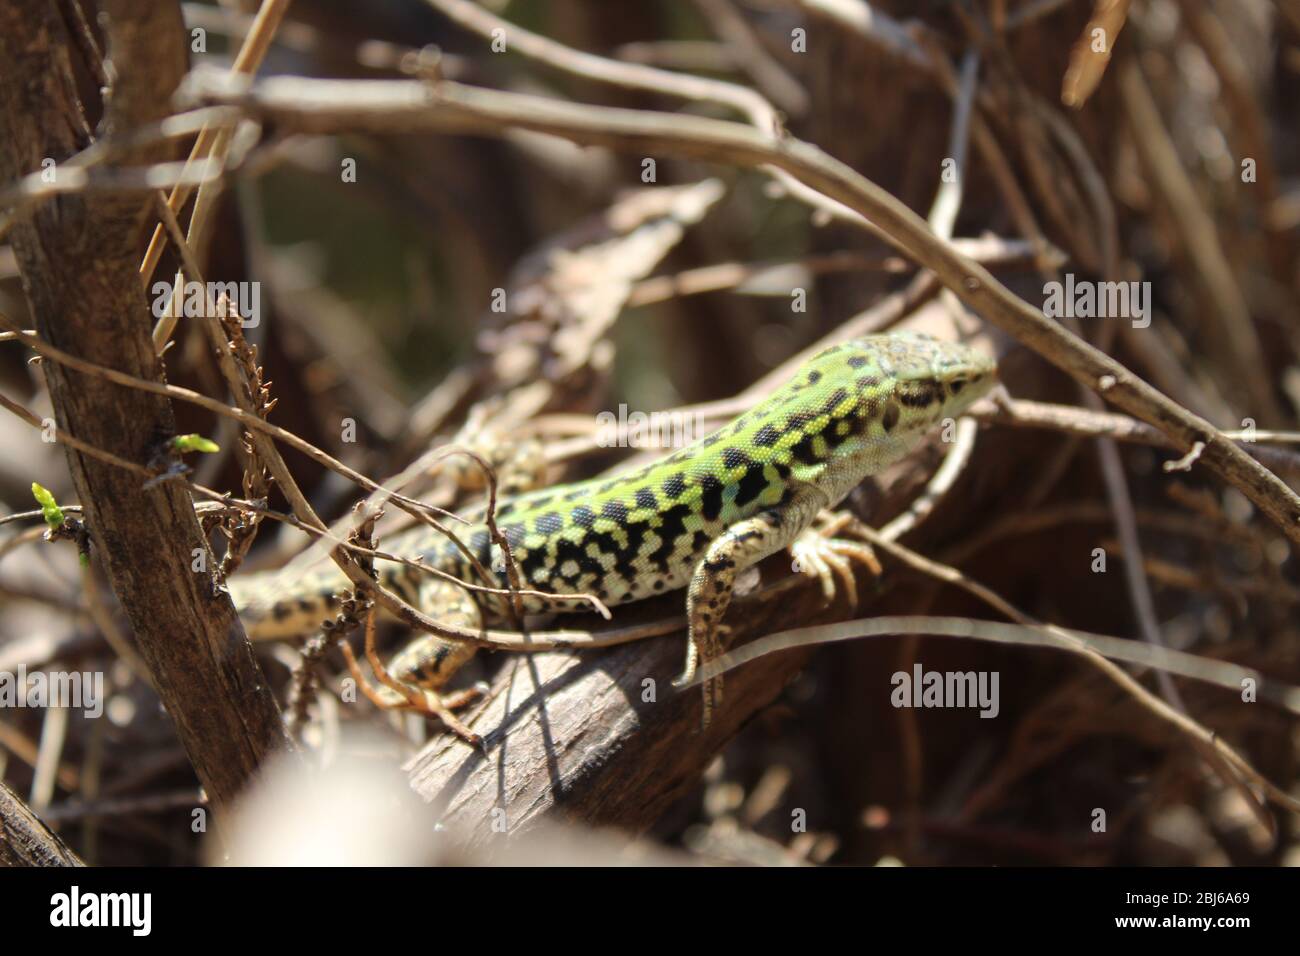 Italian wall lizard explores a dry leafless plant Stock Photo